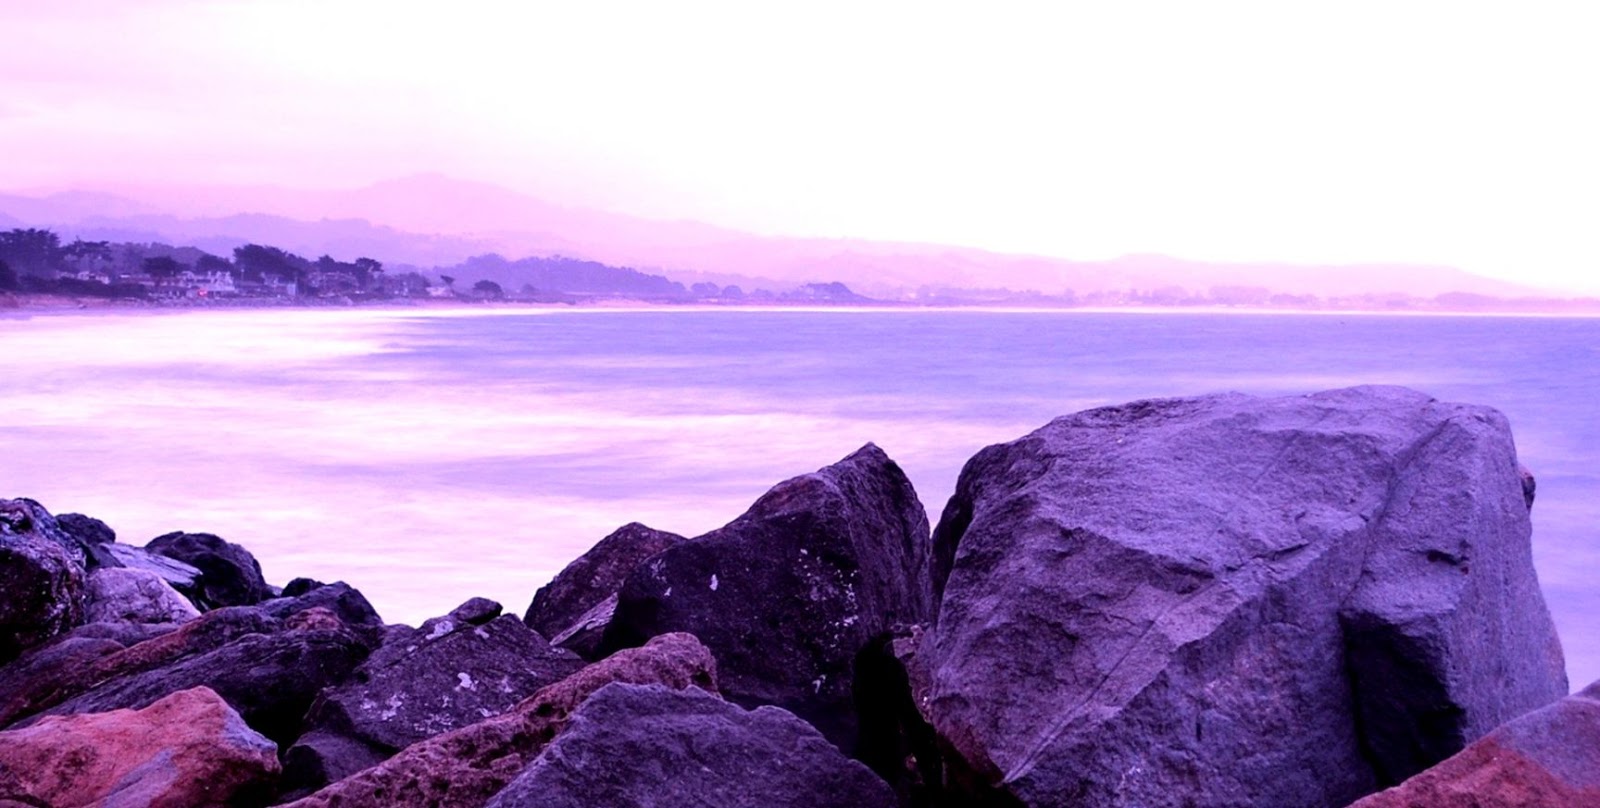 ipad hd wallpapers 1080p,purple,violet,sky,nature,sea